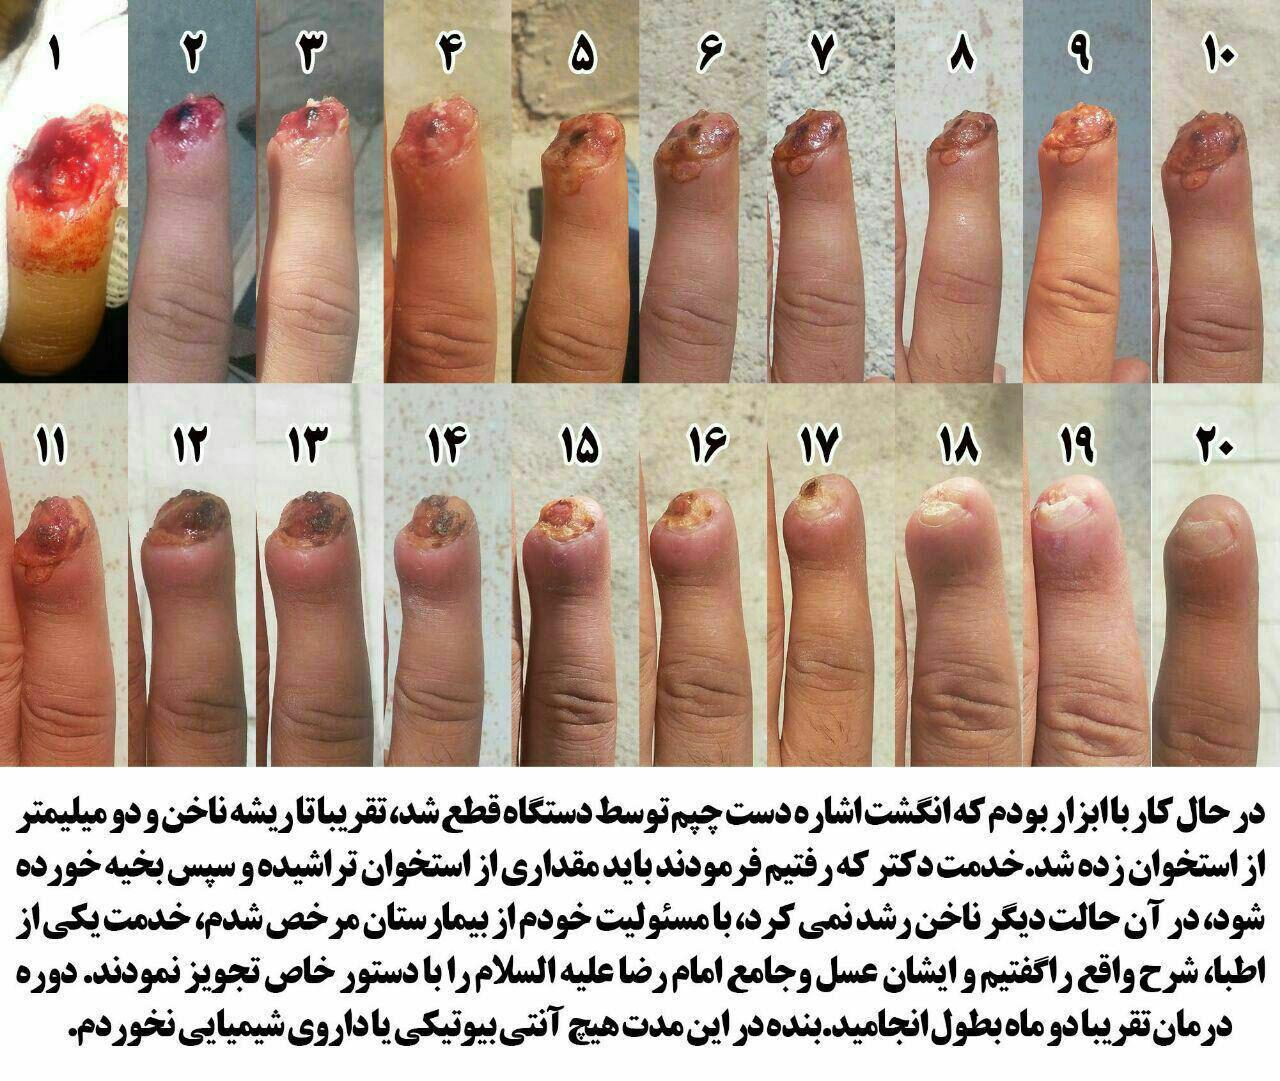 علت زخم نوک انگشتان دست
